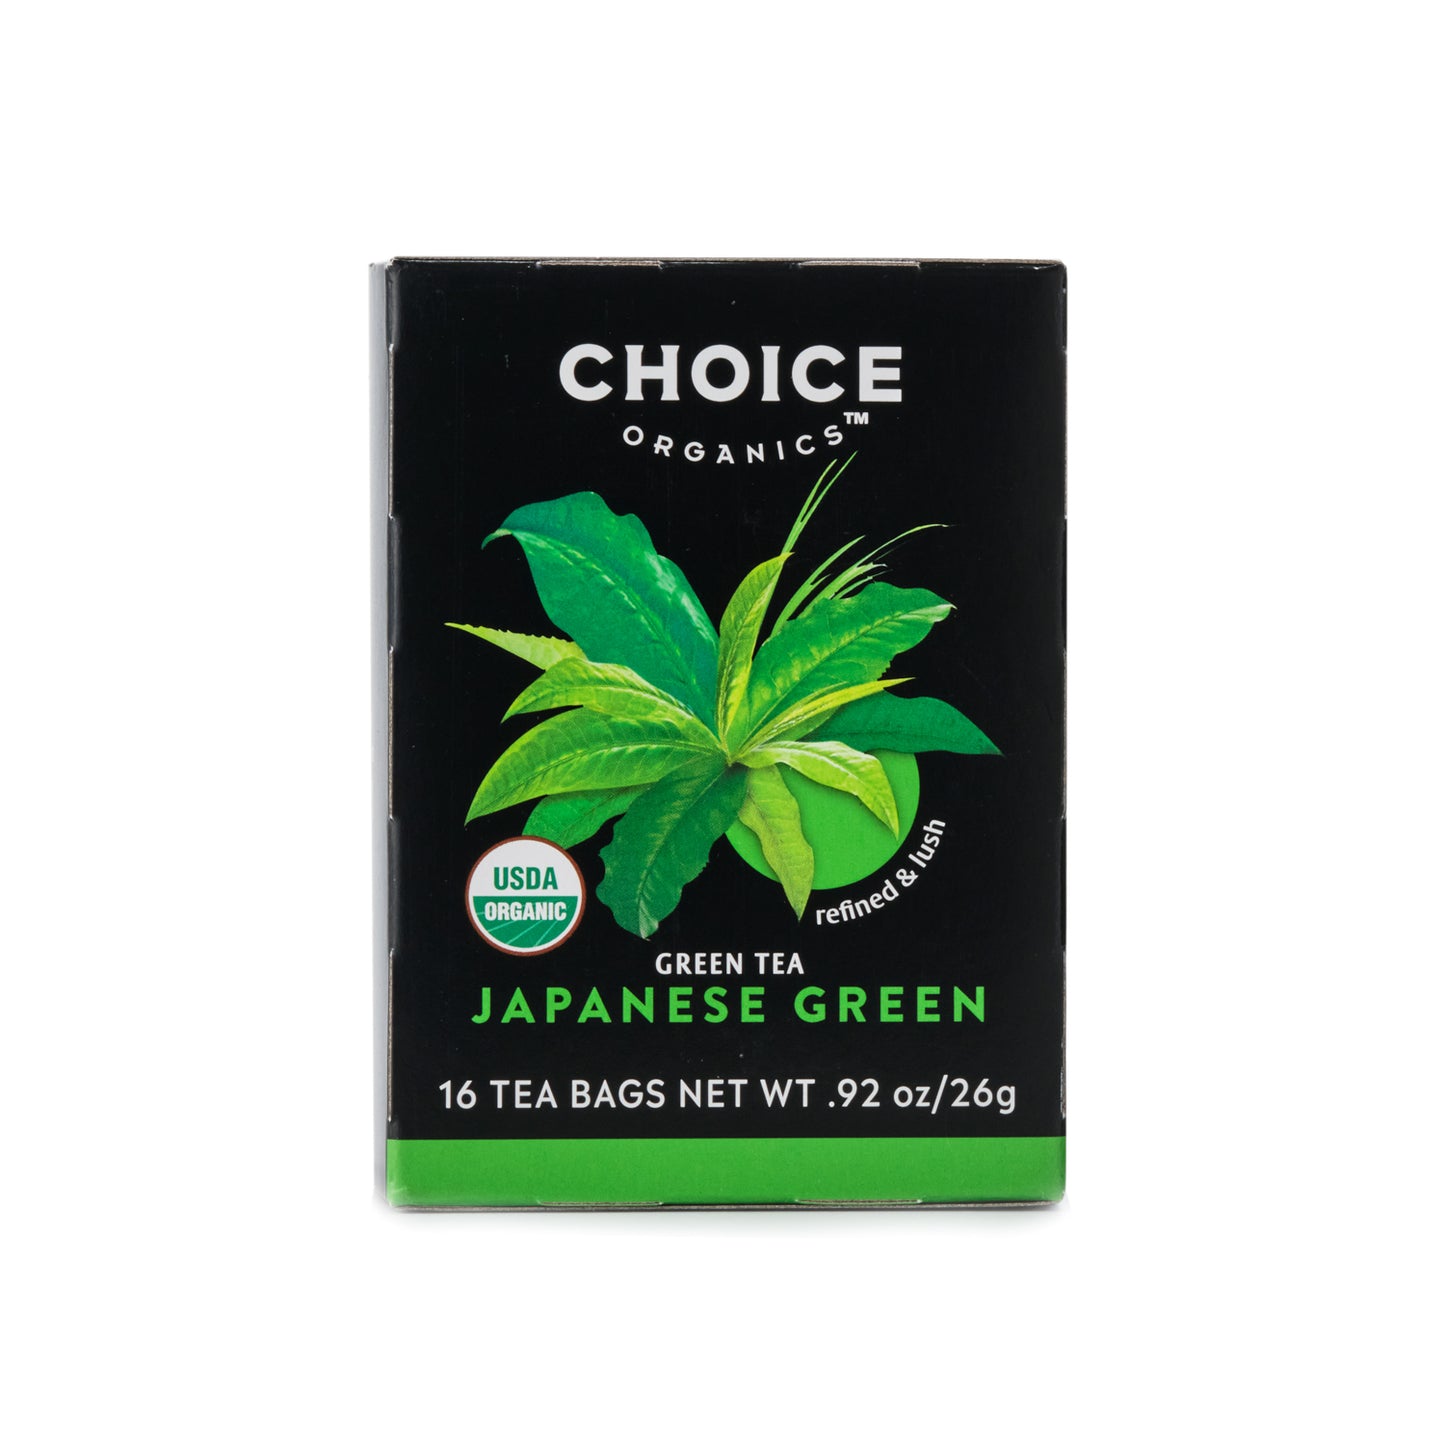 Choice Organic Teas Organic Premium Japanese Green Tea 16 tea bags